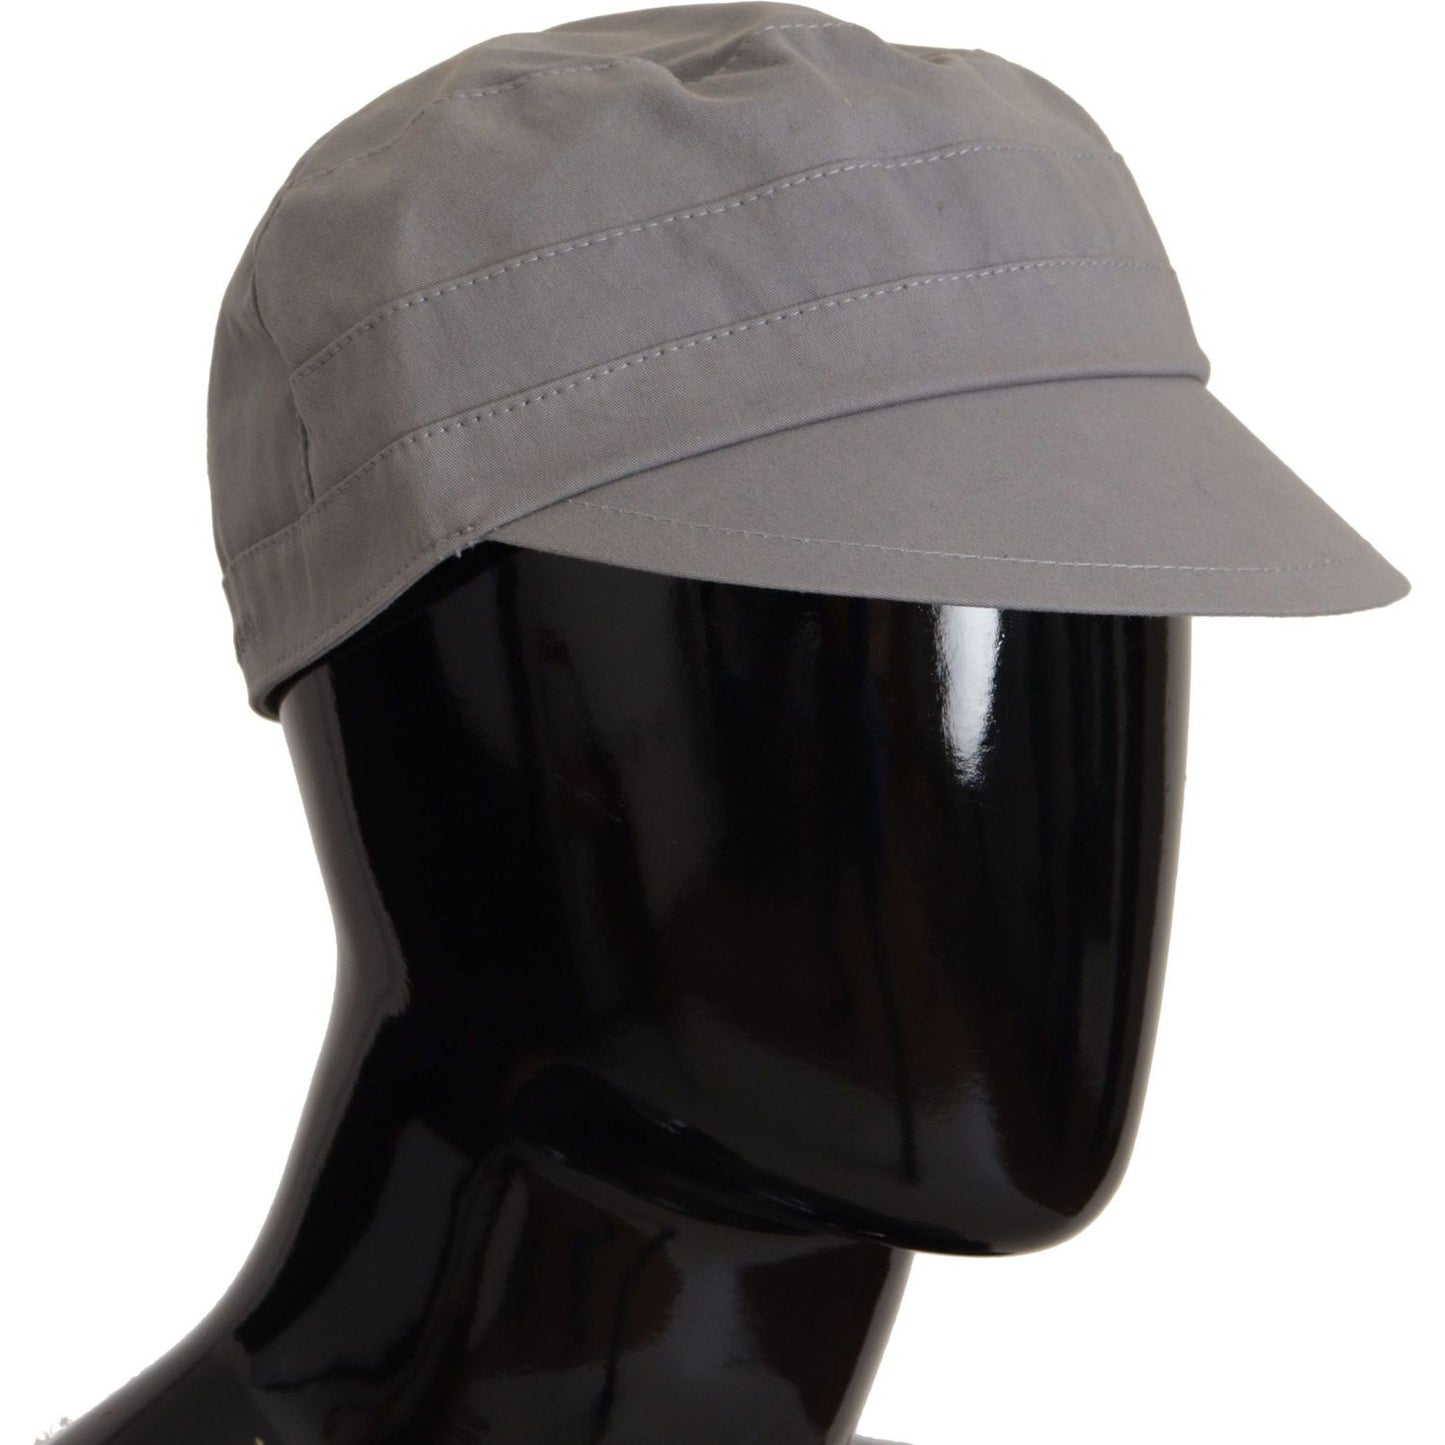 Dolce & Gabbana Elegant Gray Newsboy Cap - Classic Accessory gray-newsboy-cap-men-capello-cotton-hat IMG_8058-scaled-0e3142f5-128.jpg